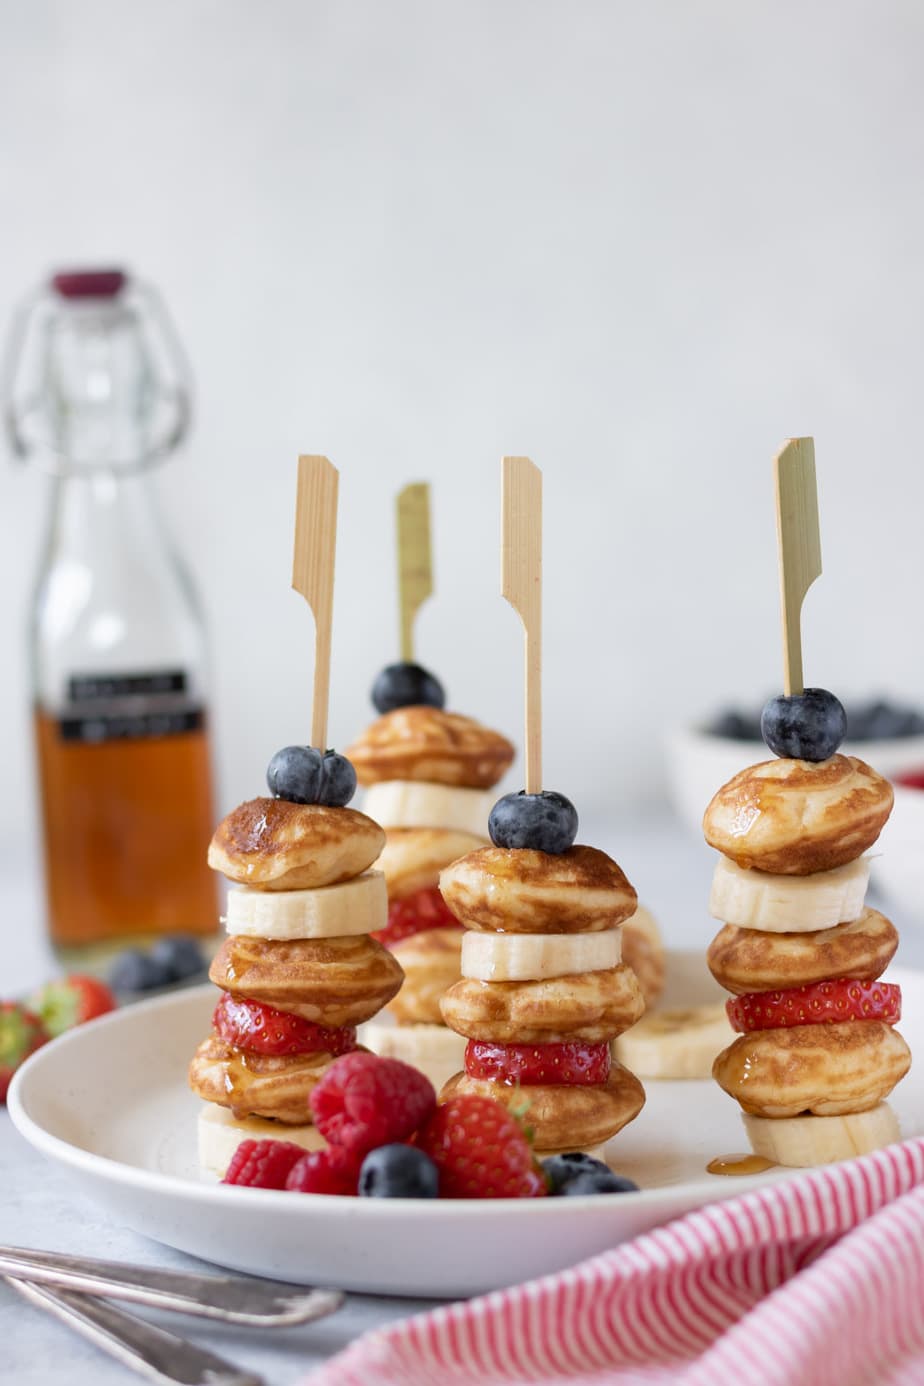 Sticks of pancakes, strawberries, bananas and blueberries - a fun breakfast recipe.